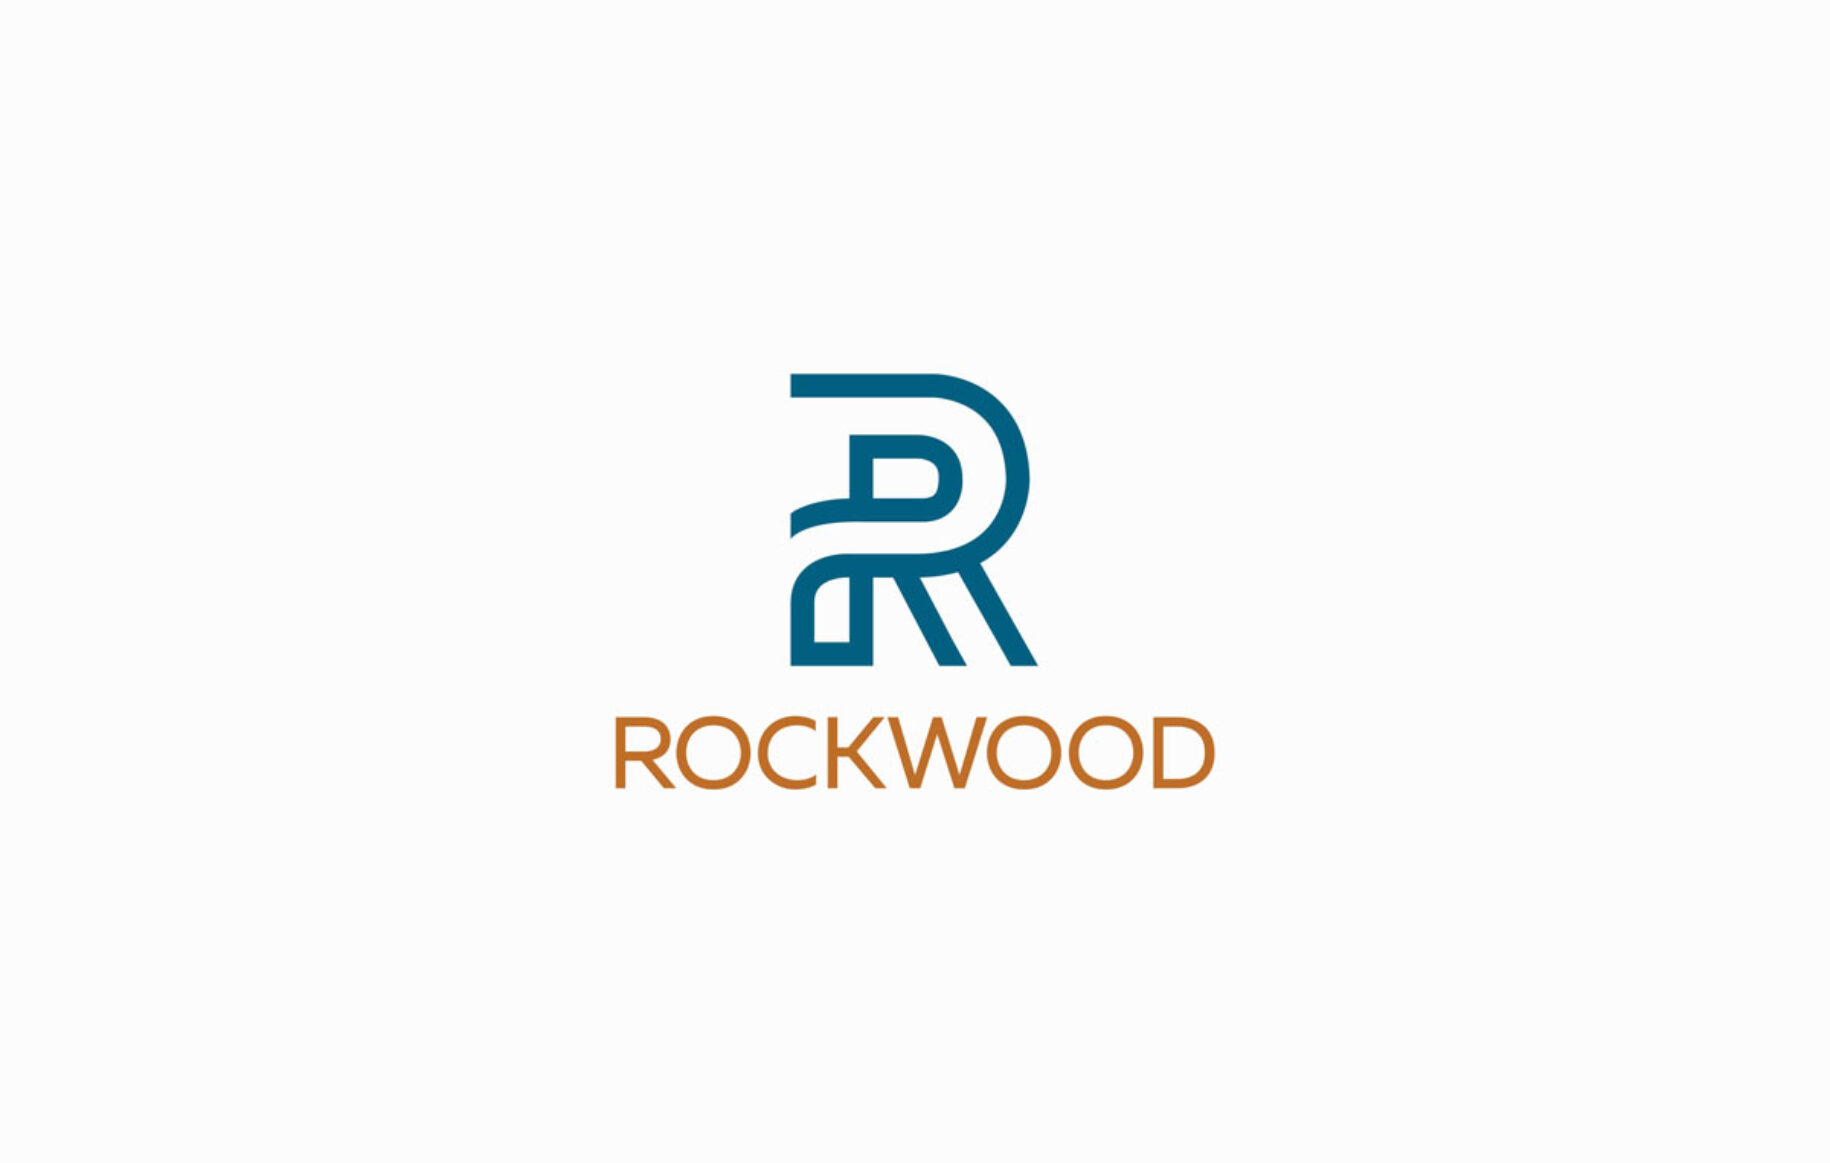 Rockwood logo in color